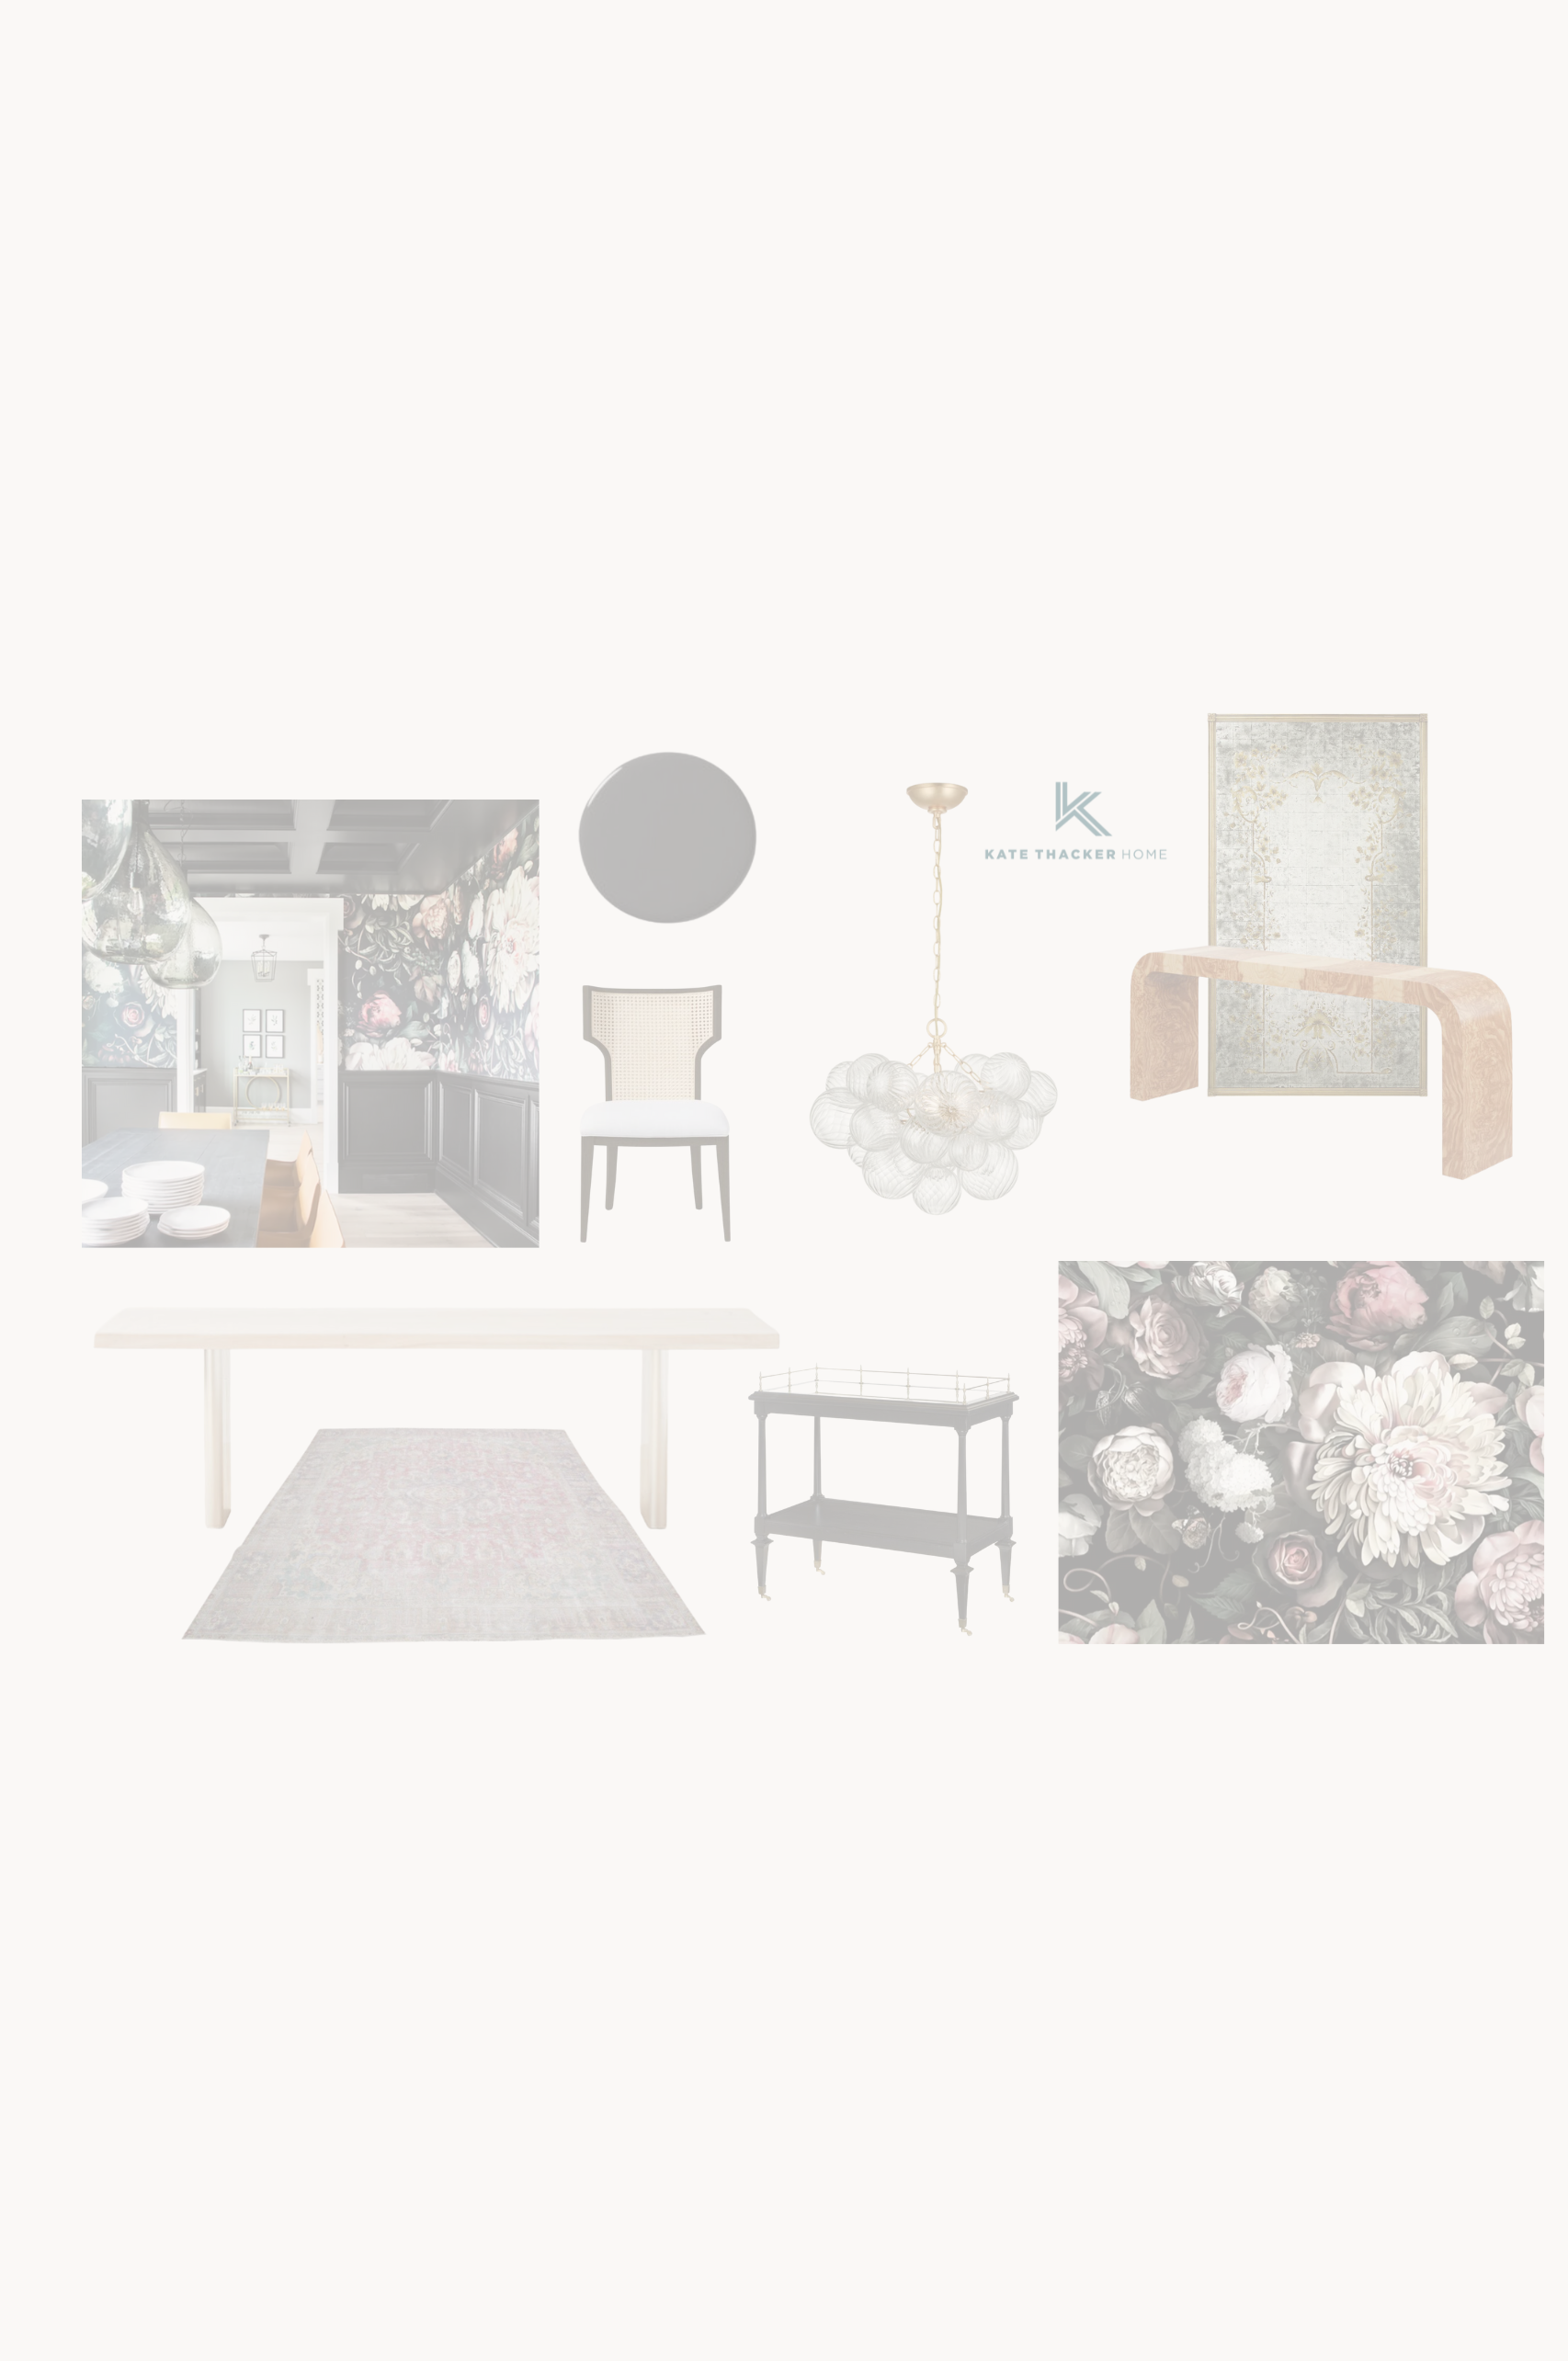 floral-and-black-wallpaper-in-craftsman-dining-room-remodel